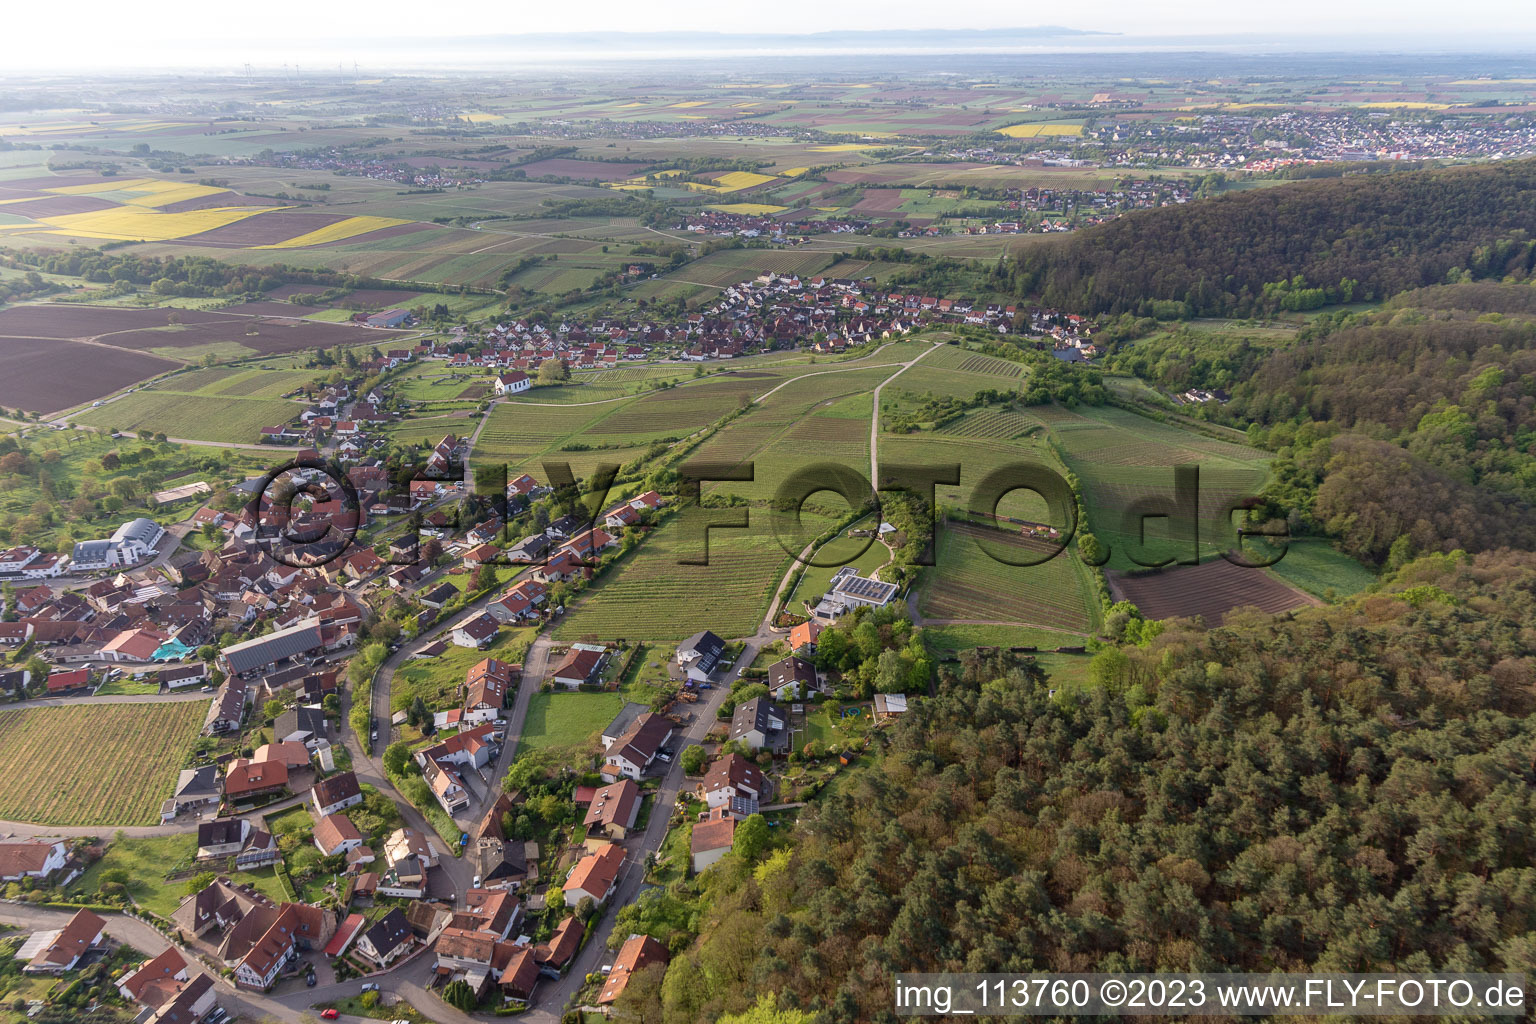 District Gleiszellen in Gleiszellen-Gleishorbach in the state Rhineland-Palatinate, Germany from above